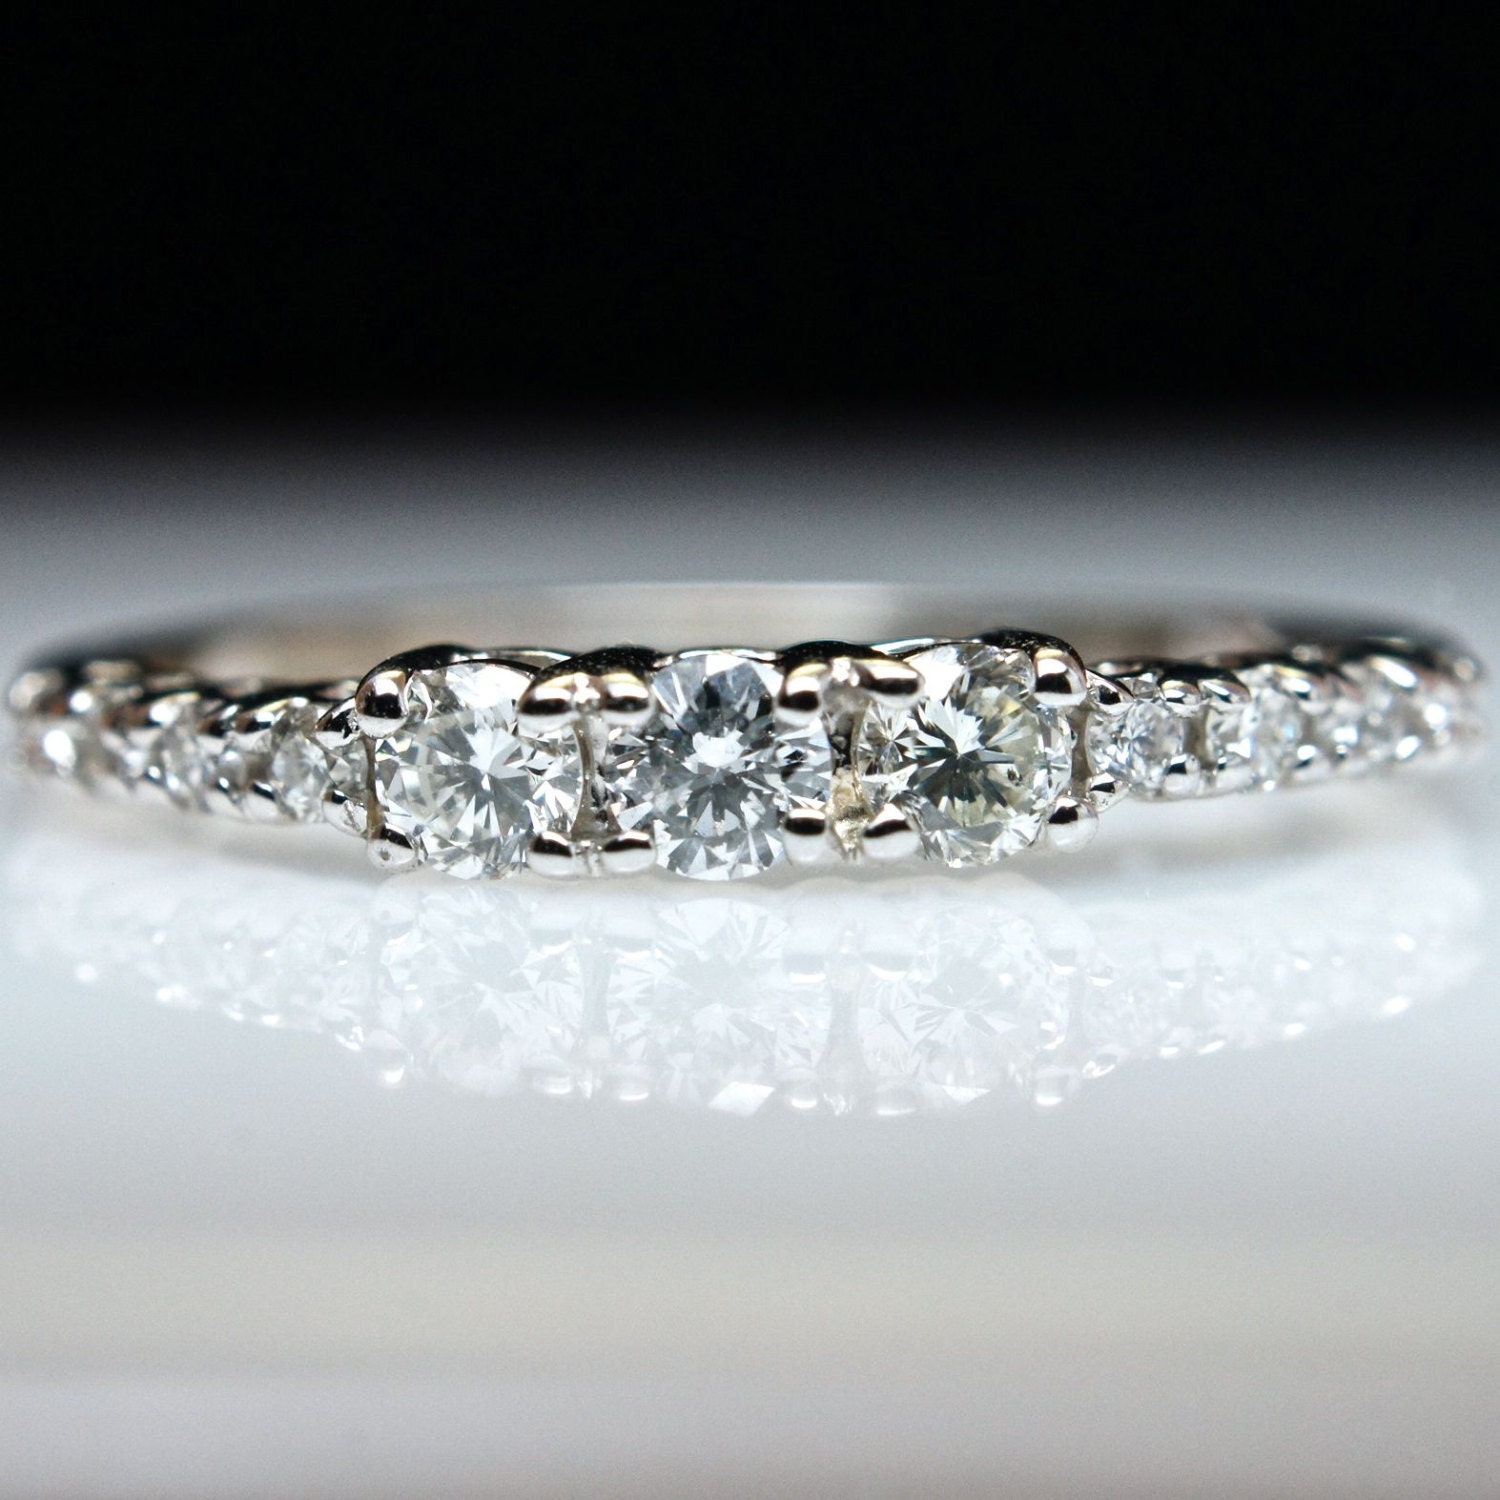 Diamond Promise Ring Band - 14k White Gold - Size 4.5 - Layaway ...